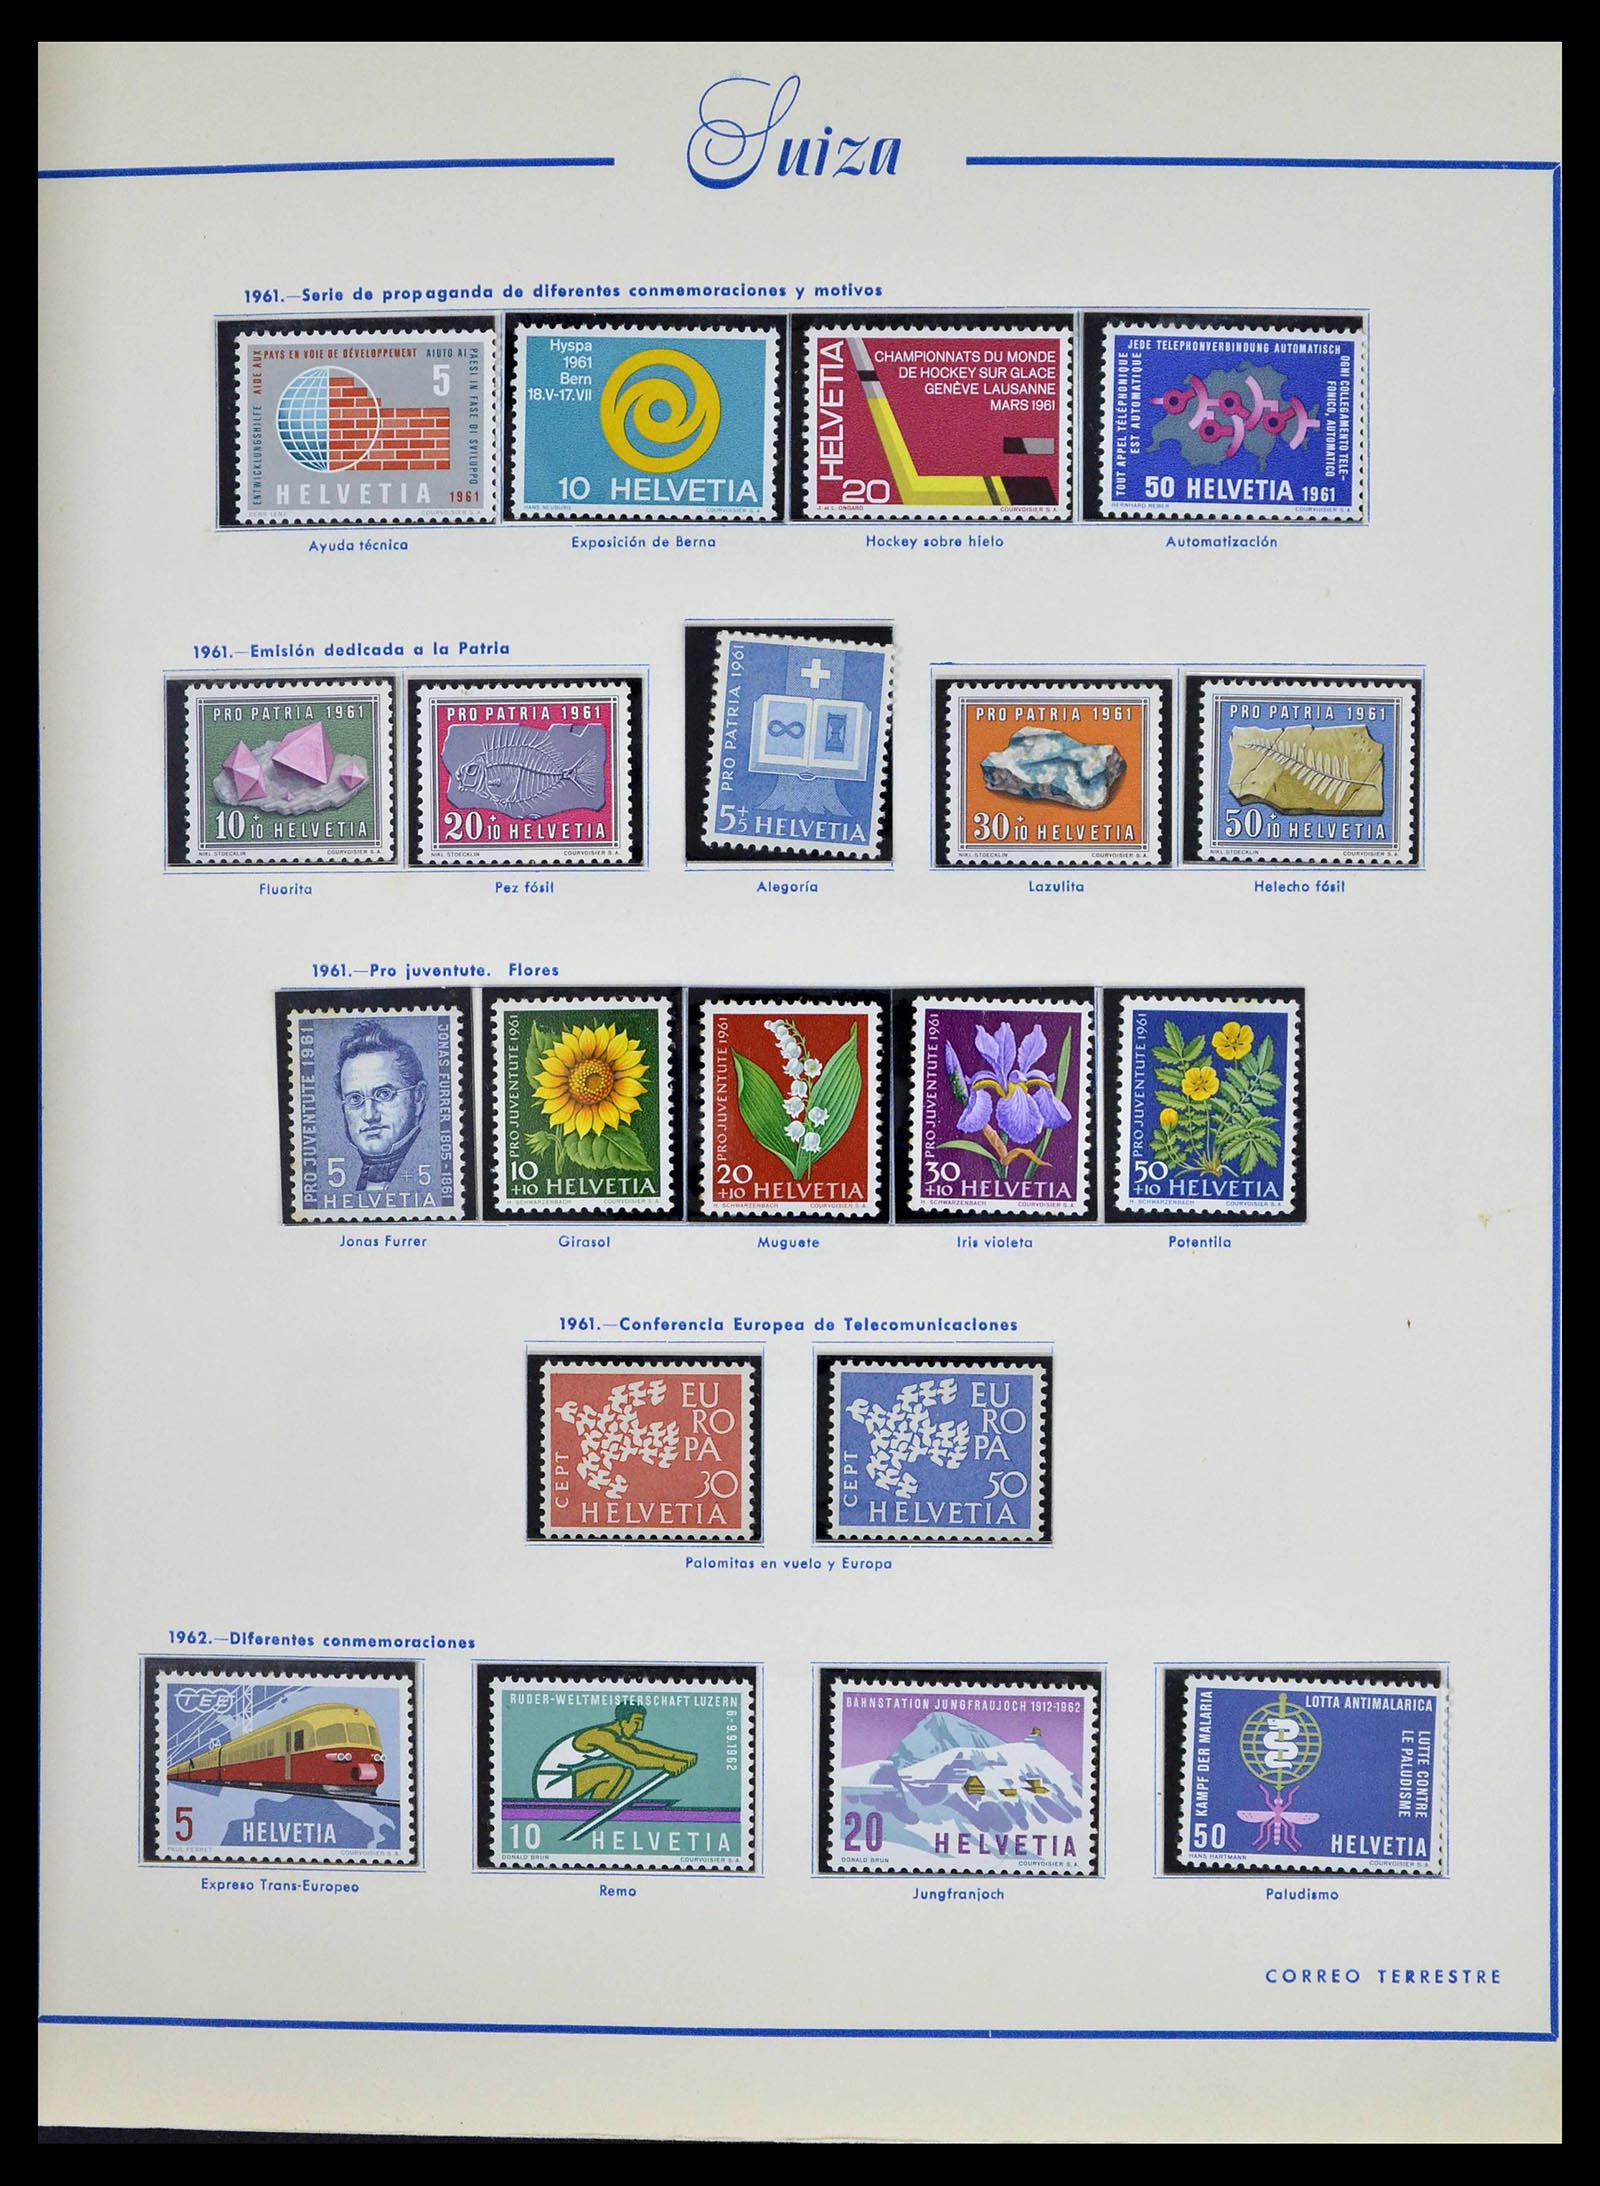 39217 0040 - Stamp collection 39217 Switzerland 1850-1986.